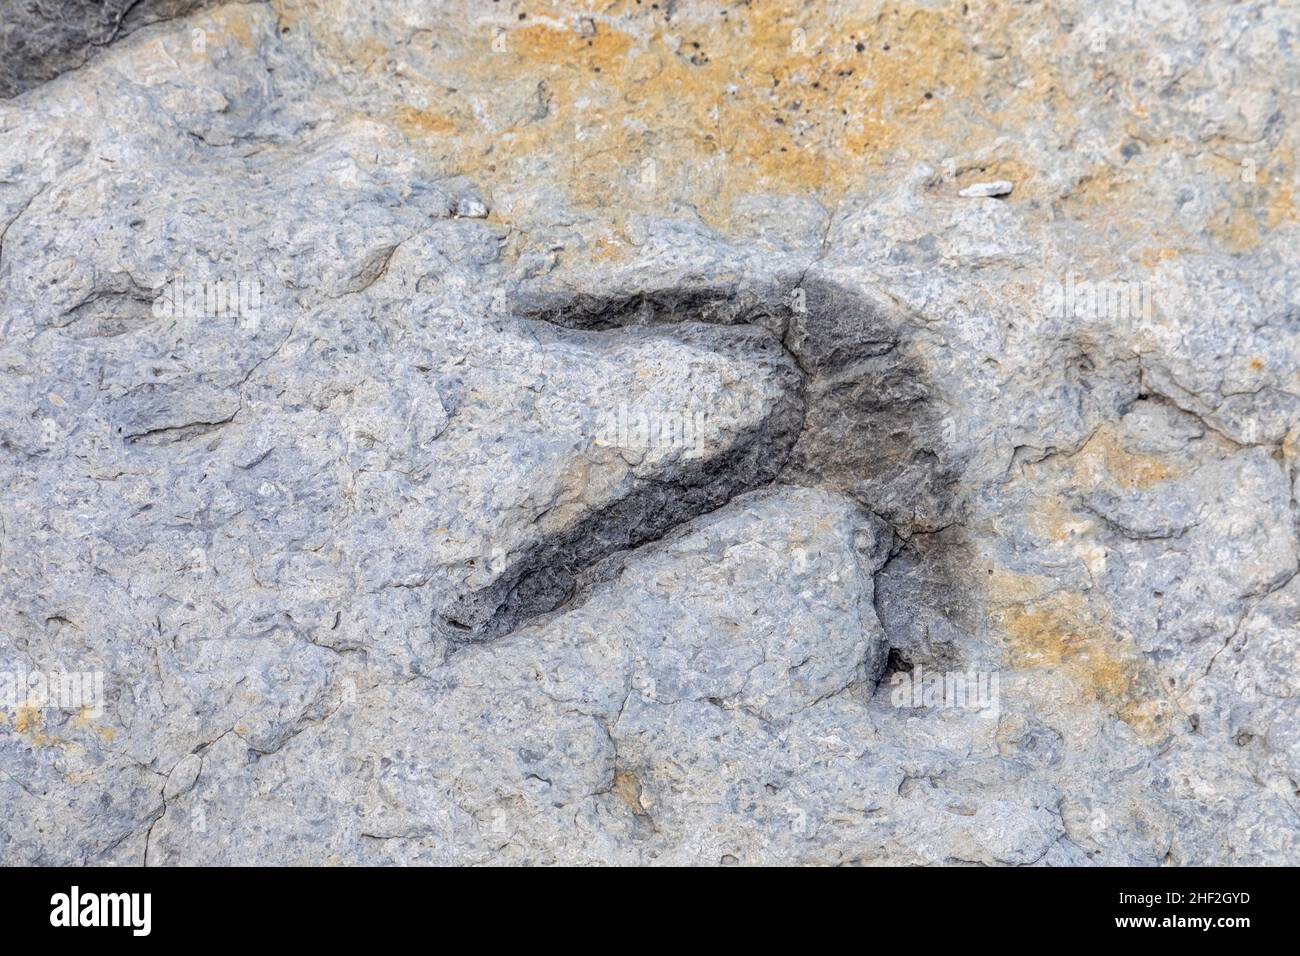 Morrison, Colorado - The tracks of an orthinomimid, a omnivorous dinosaur, at Dinosaur Ridge. Visitors can see hundreds of dinosaur footprints along t Stock Photo